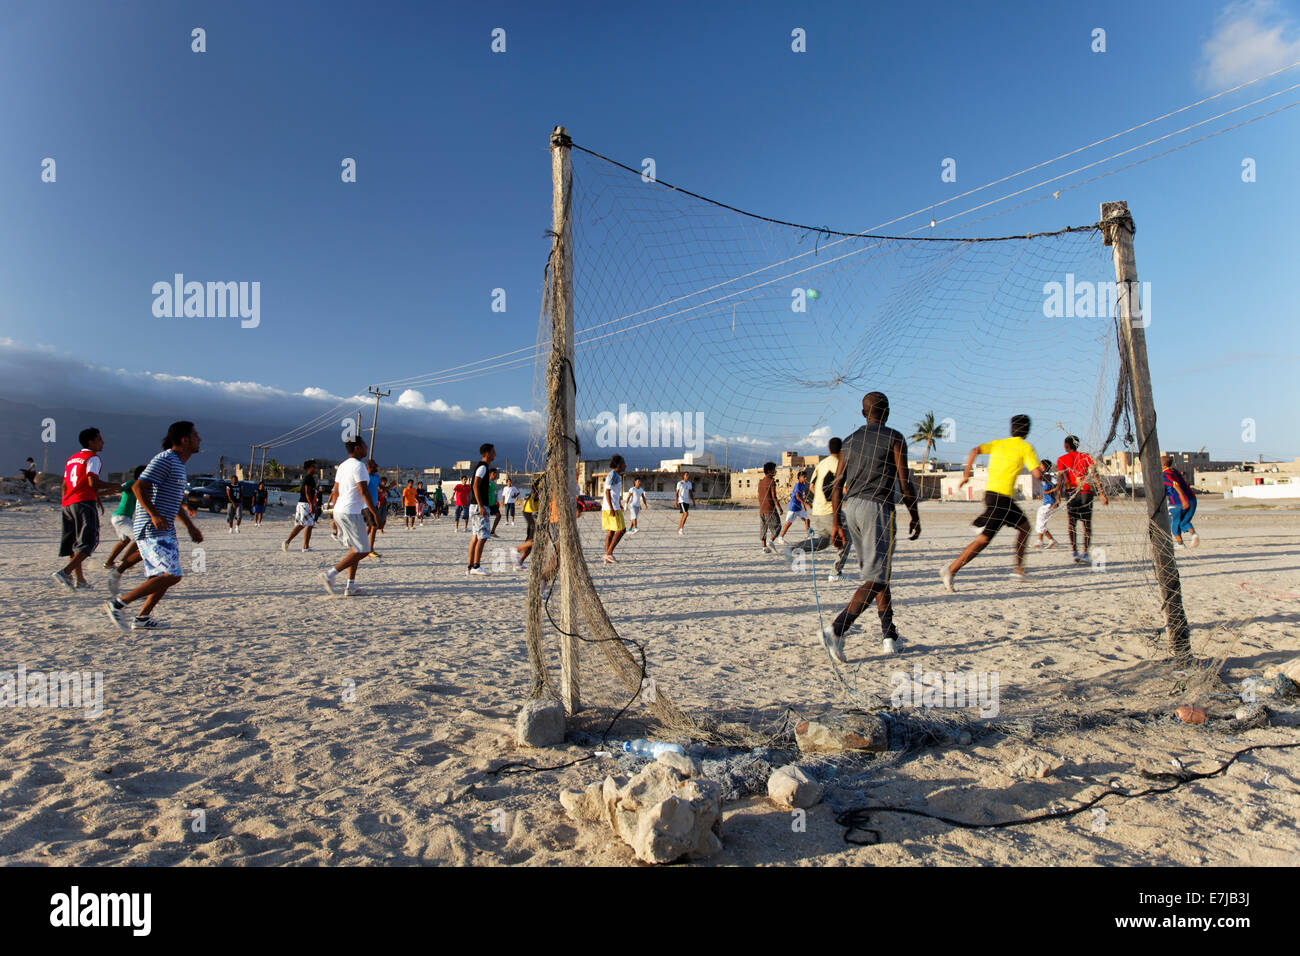 Omanis playing football, Mirbat, Dhofar region, Sultanate of Oman, Arabian Peninsula Stock Photo